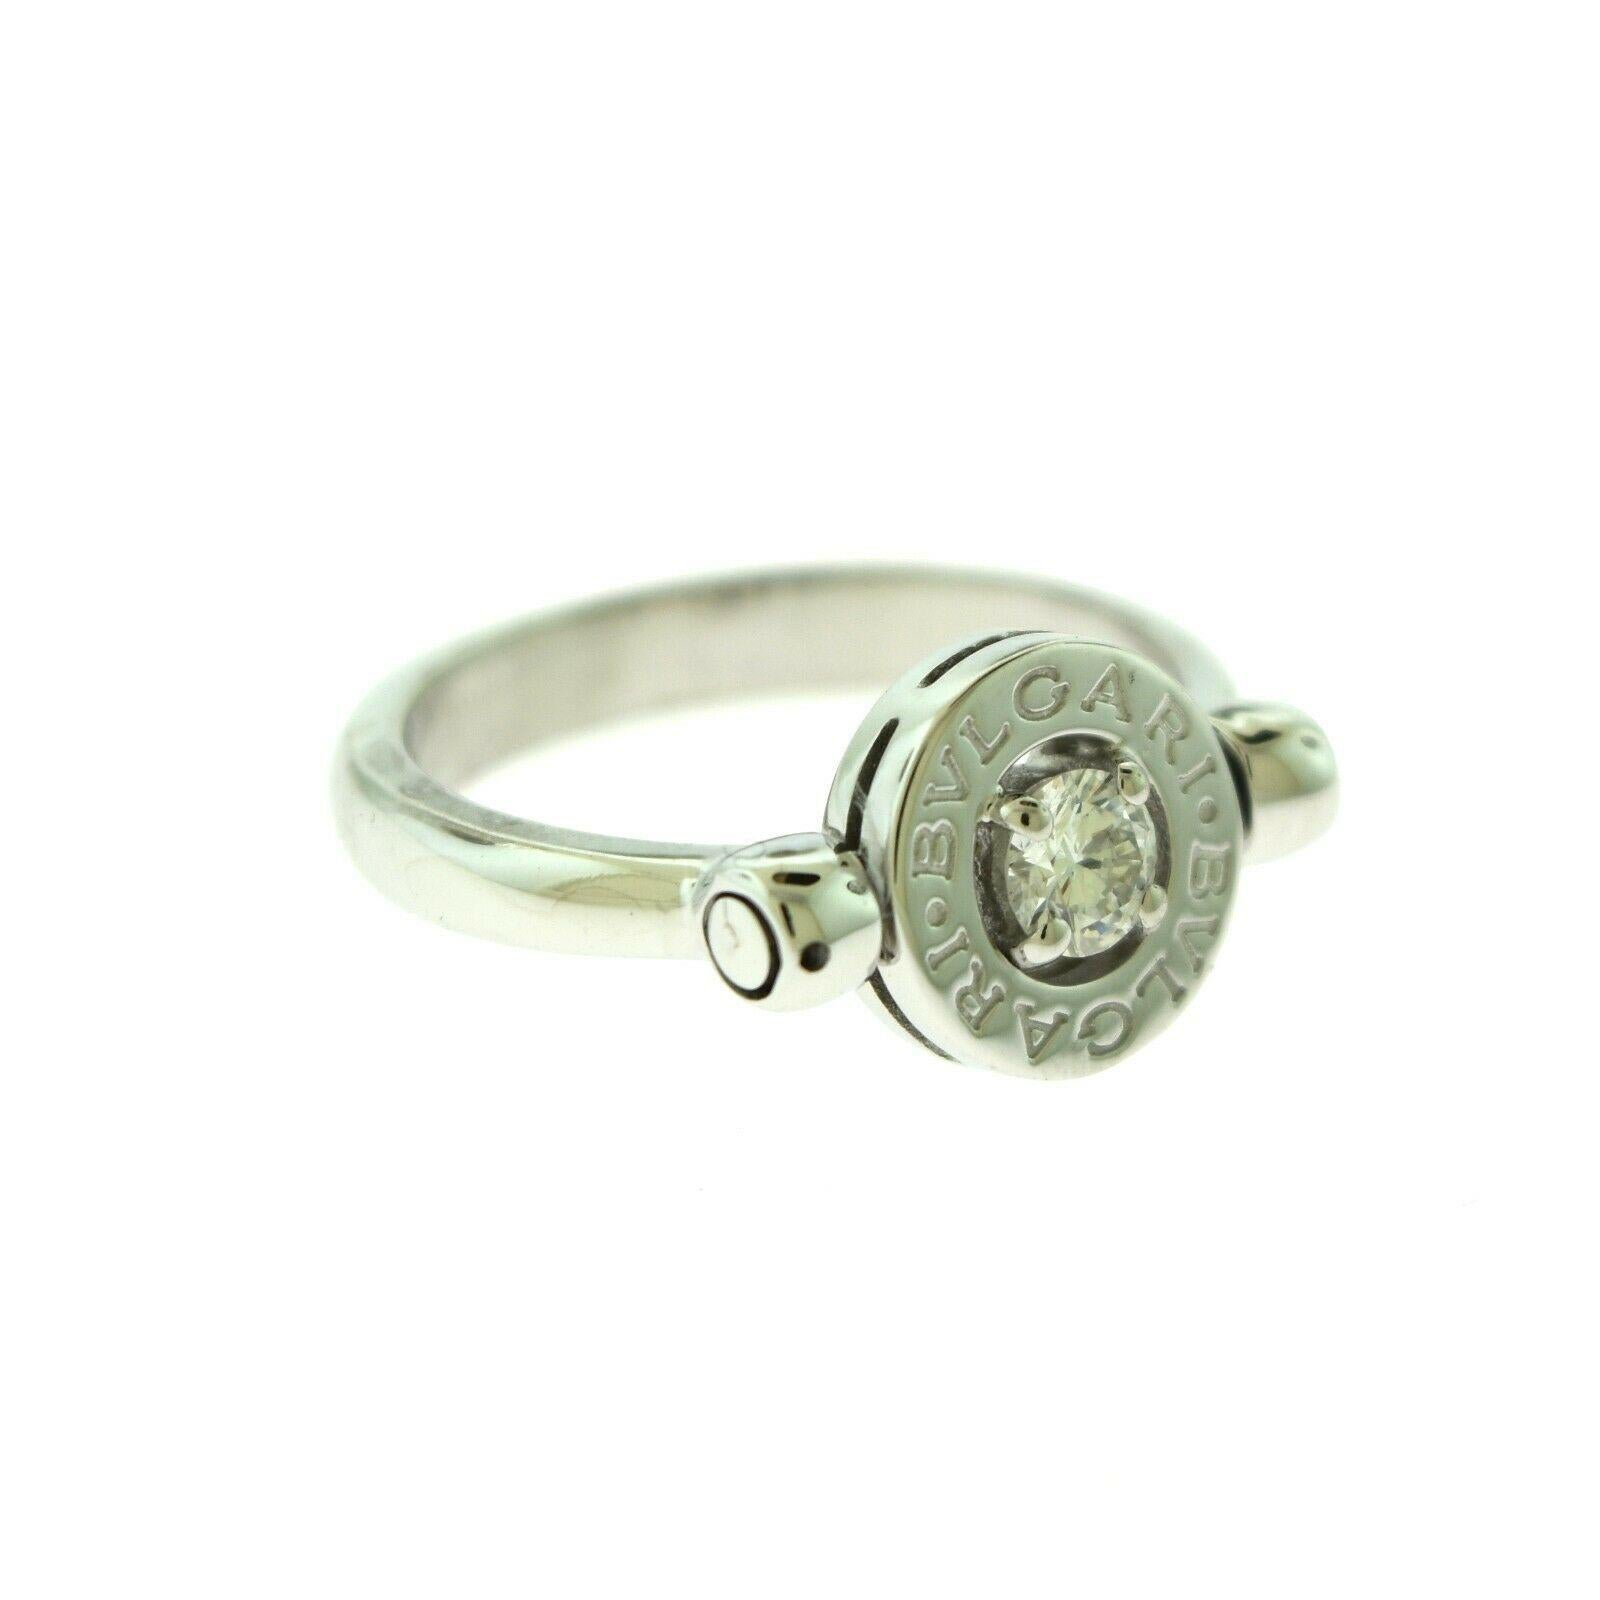 Brilliance Jewels, Miami
Questions? Call Us Anytime!
786,482,8100

Designer: Bvlgari

Collection: Bvlgari Bvlgari

Style: Ring

Metal: White Gold 

Metal Purity: 18k 

Stones: Round Brilliant Cut Diamond 

Ring Size: 52 (Euro); 6(US)

Diamond Color: